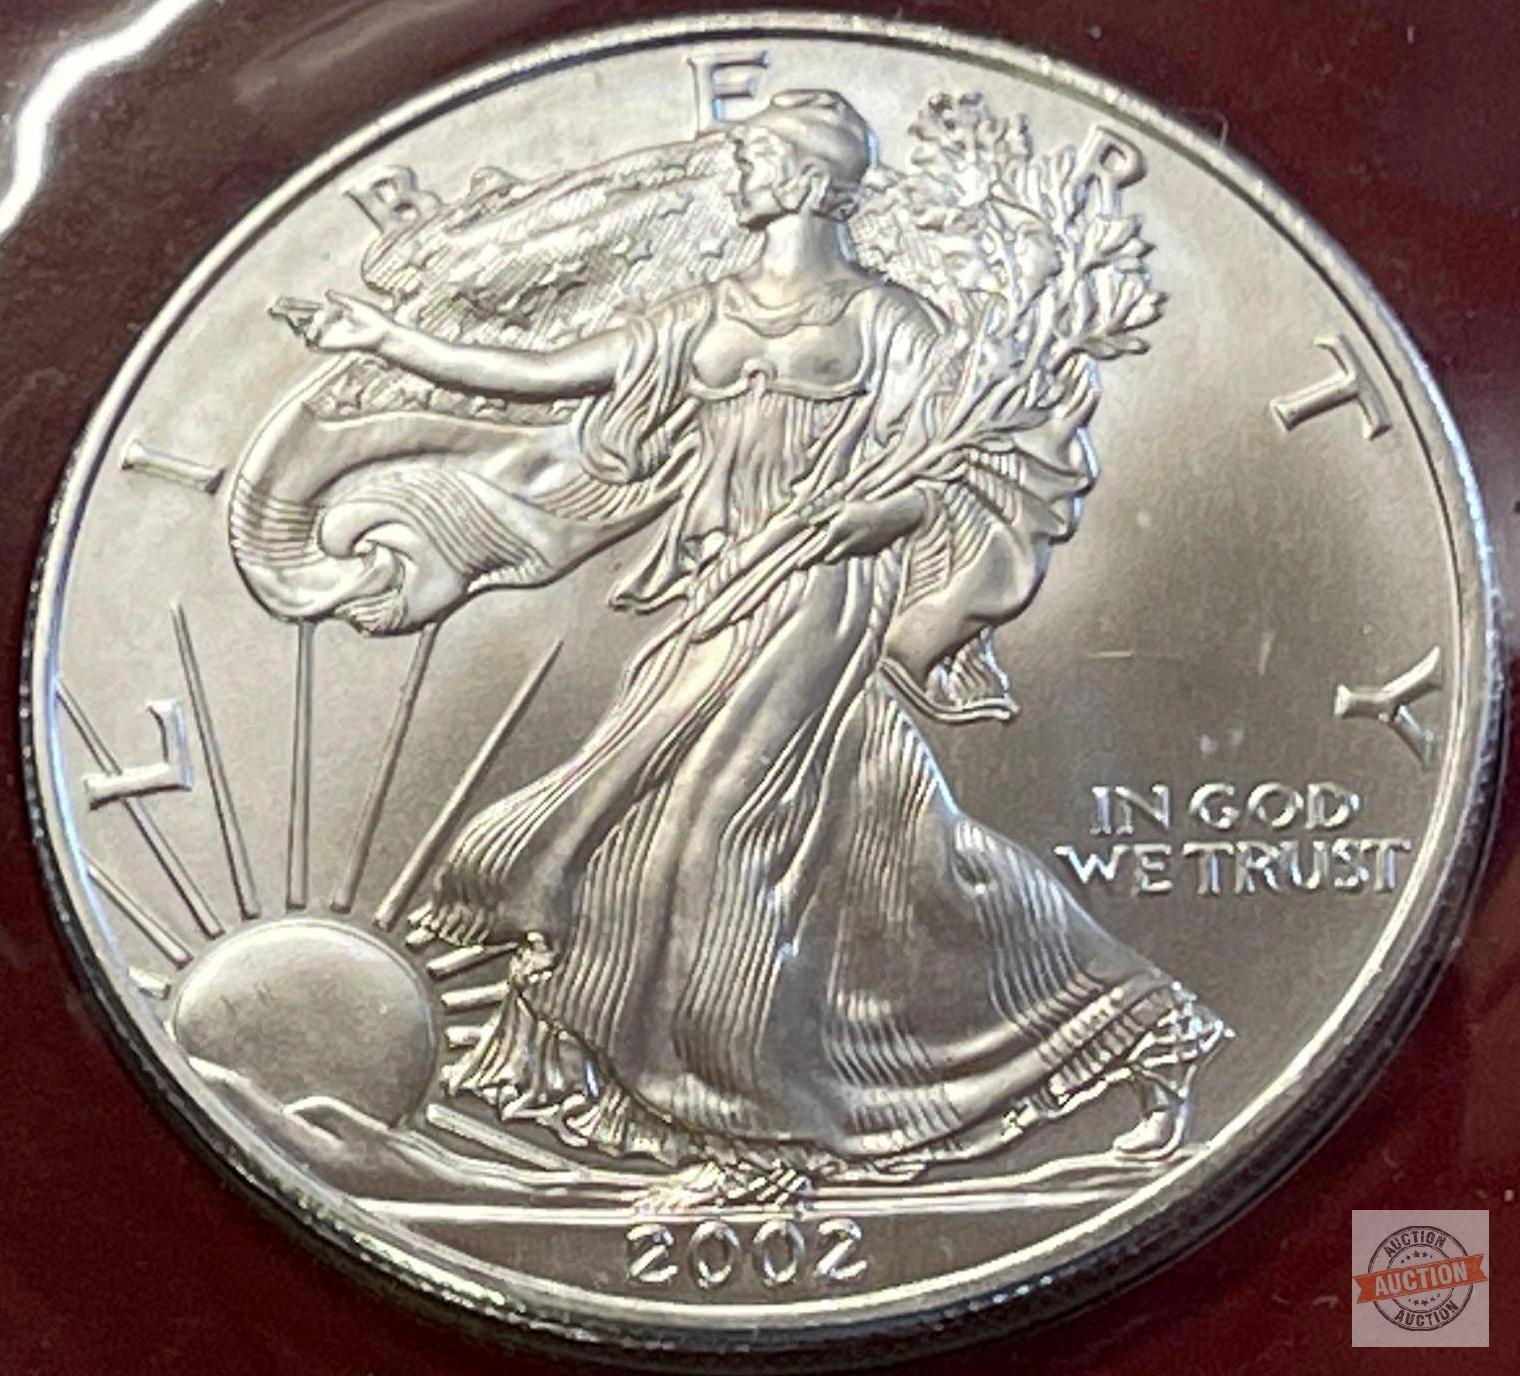 4 Silver dollars 1794, 1881, 1926, 2002, 4 Centuries of Silver Dollars